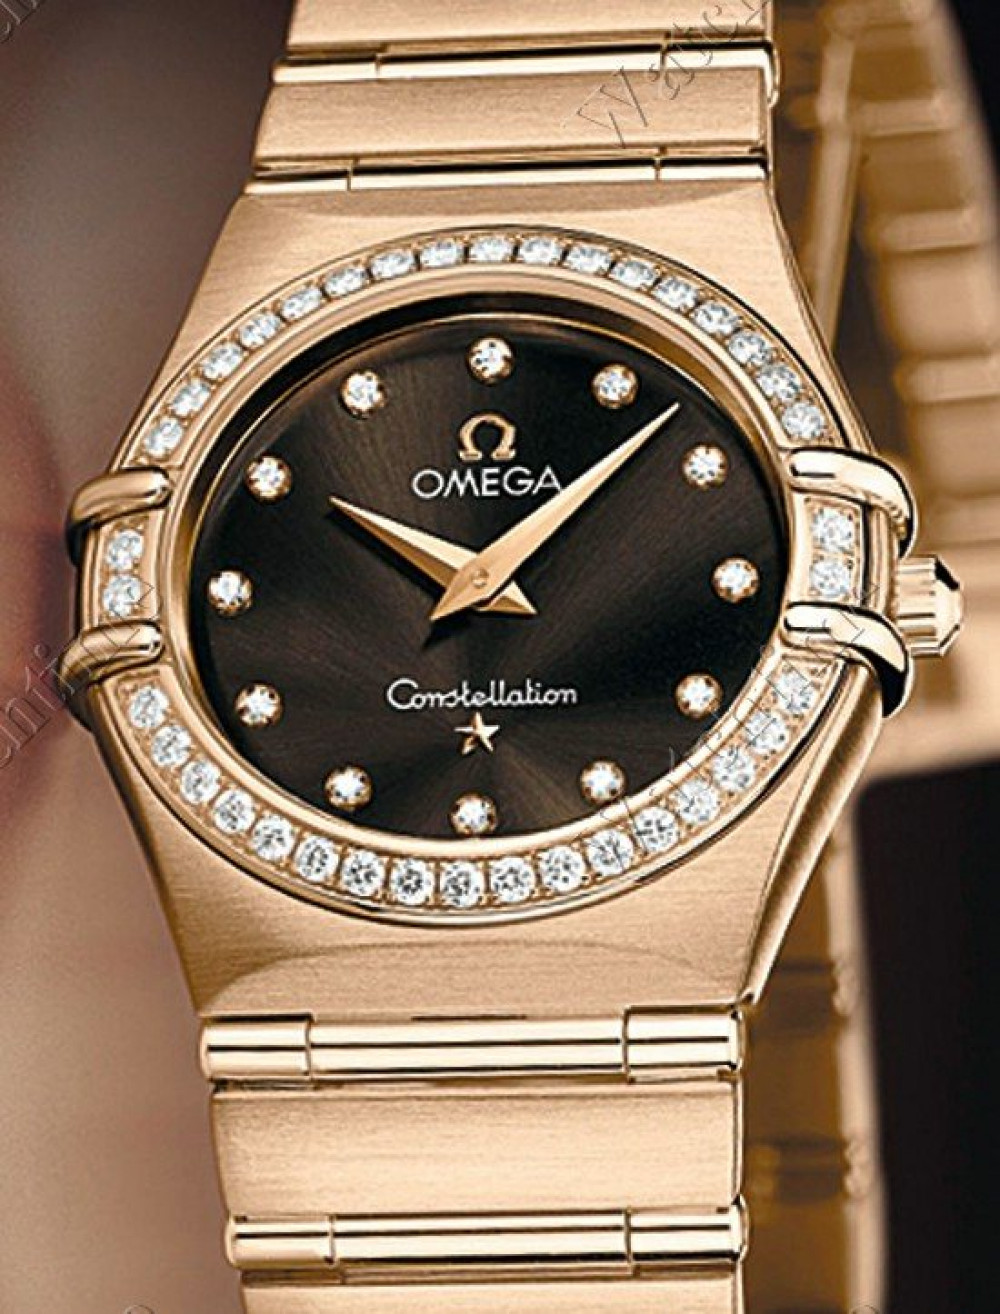 Zegarek firmy Omega, model Constellation